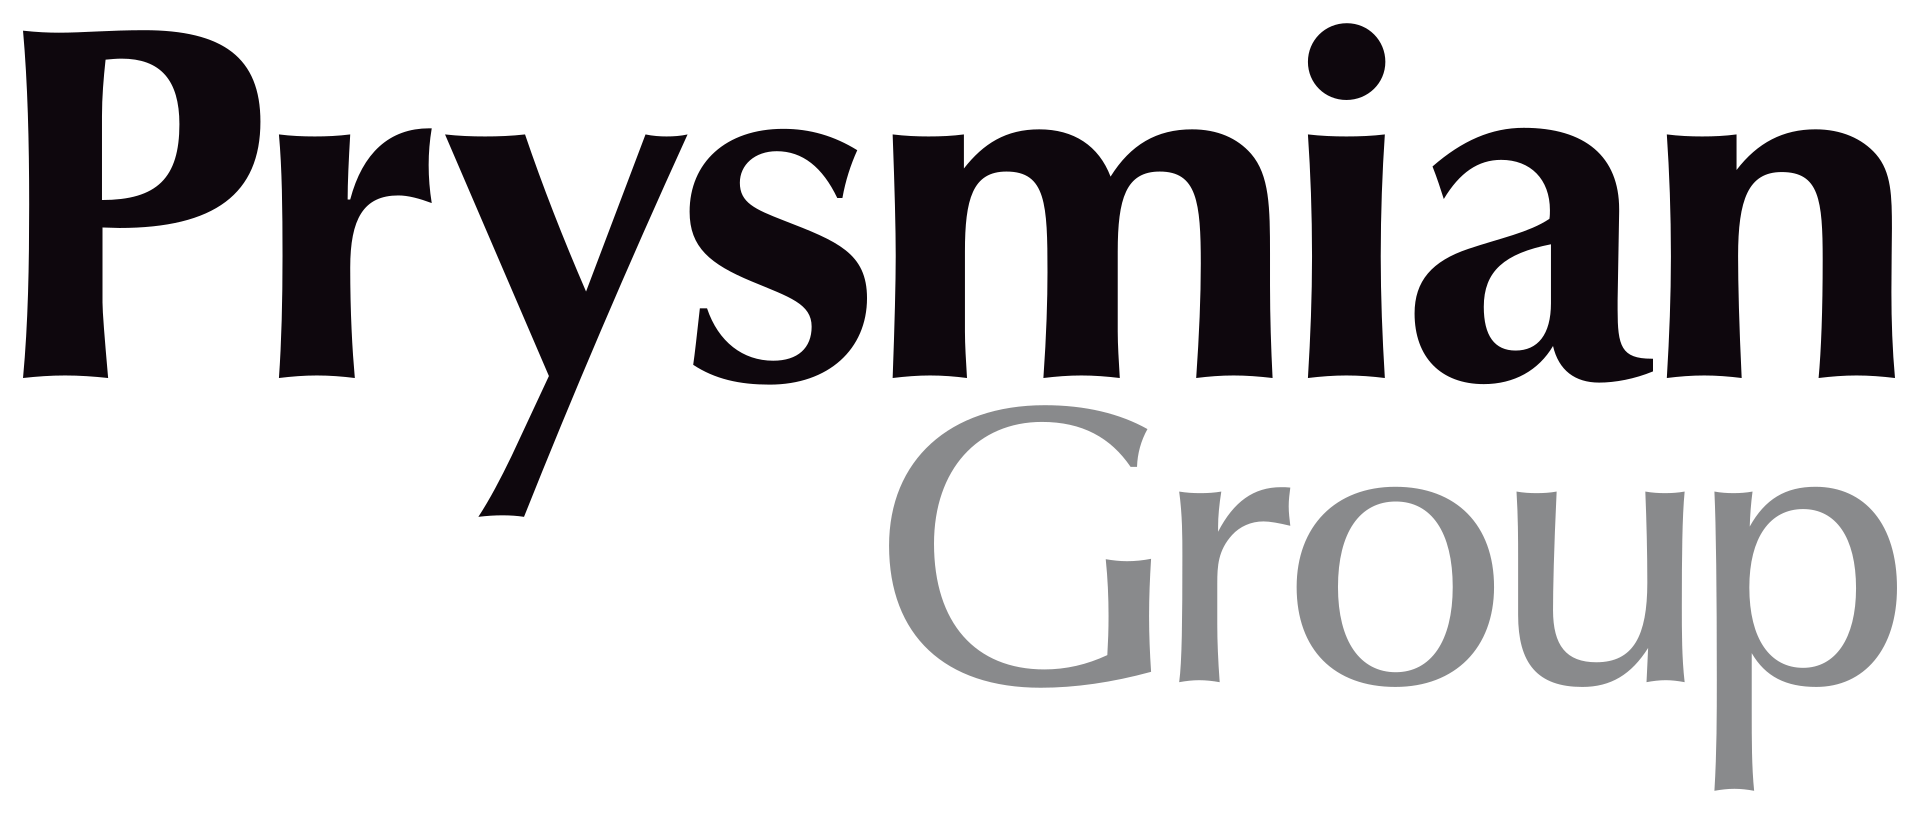 Prysmian Group - Cables, Energy & Telecom Solutions - Pirelli Cables - Присмиан РУС